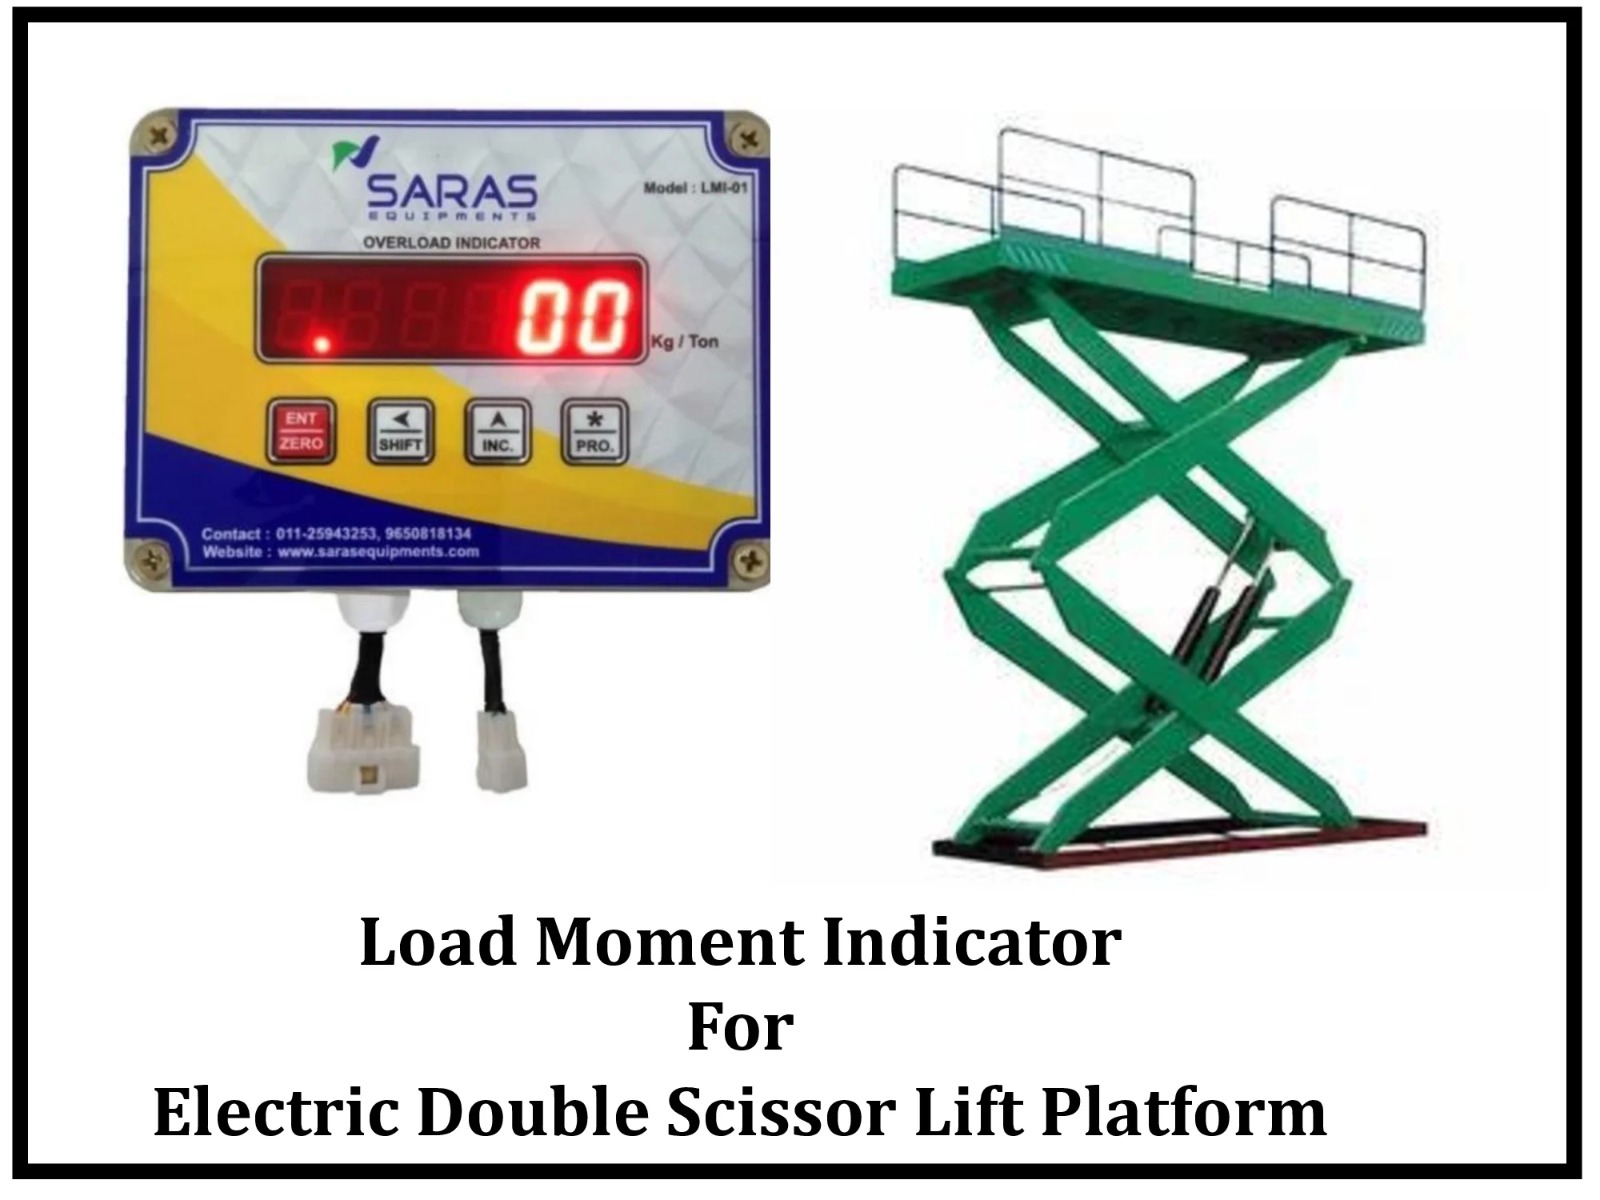 Load Moment Indicator for Electric Scissor Lift